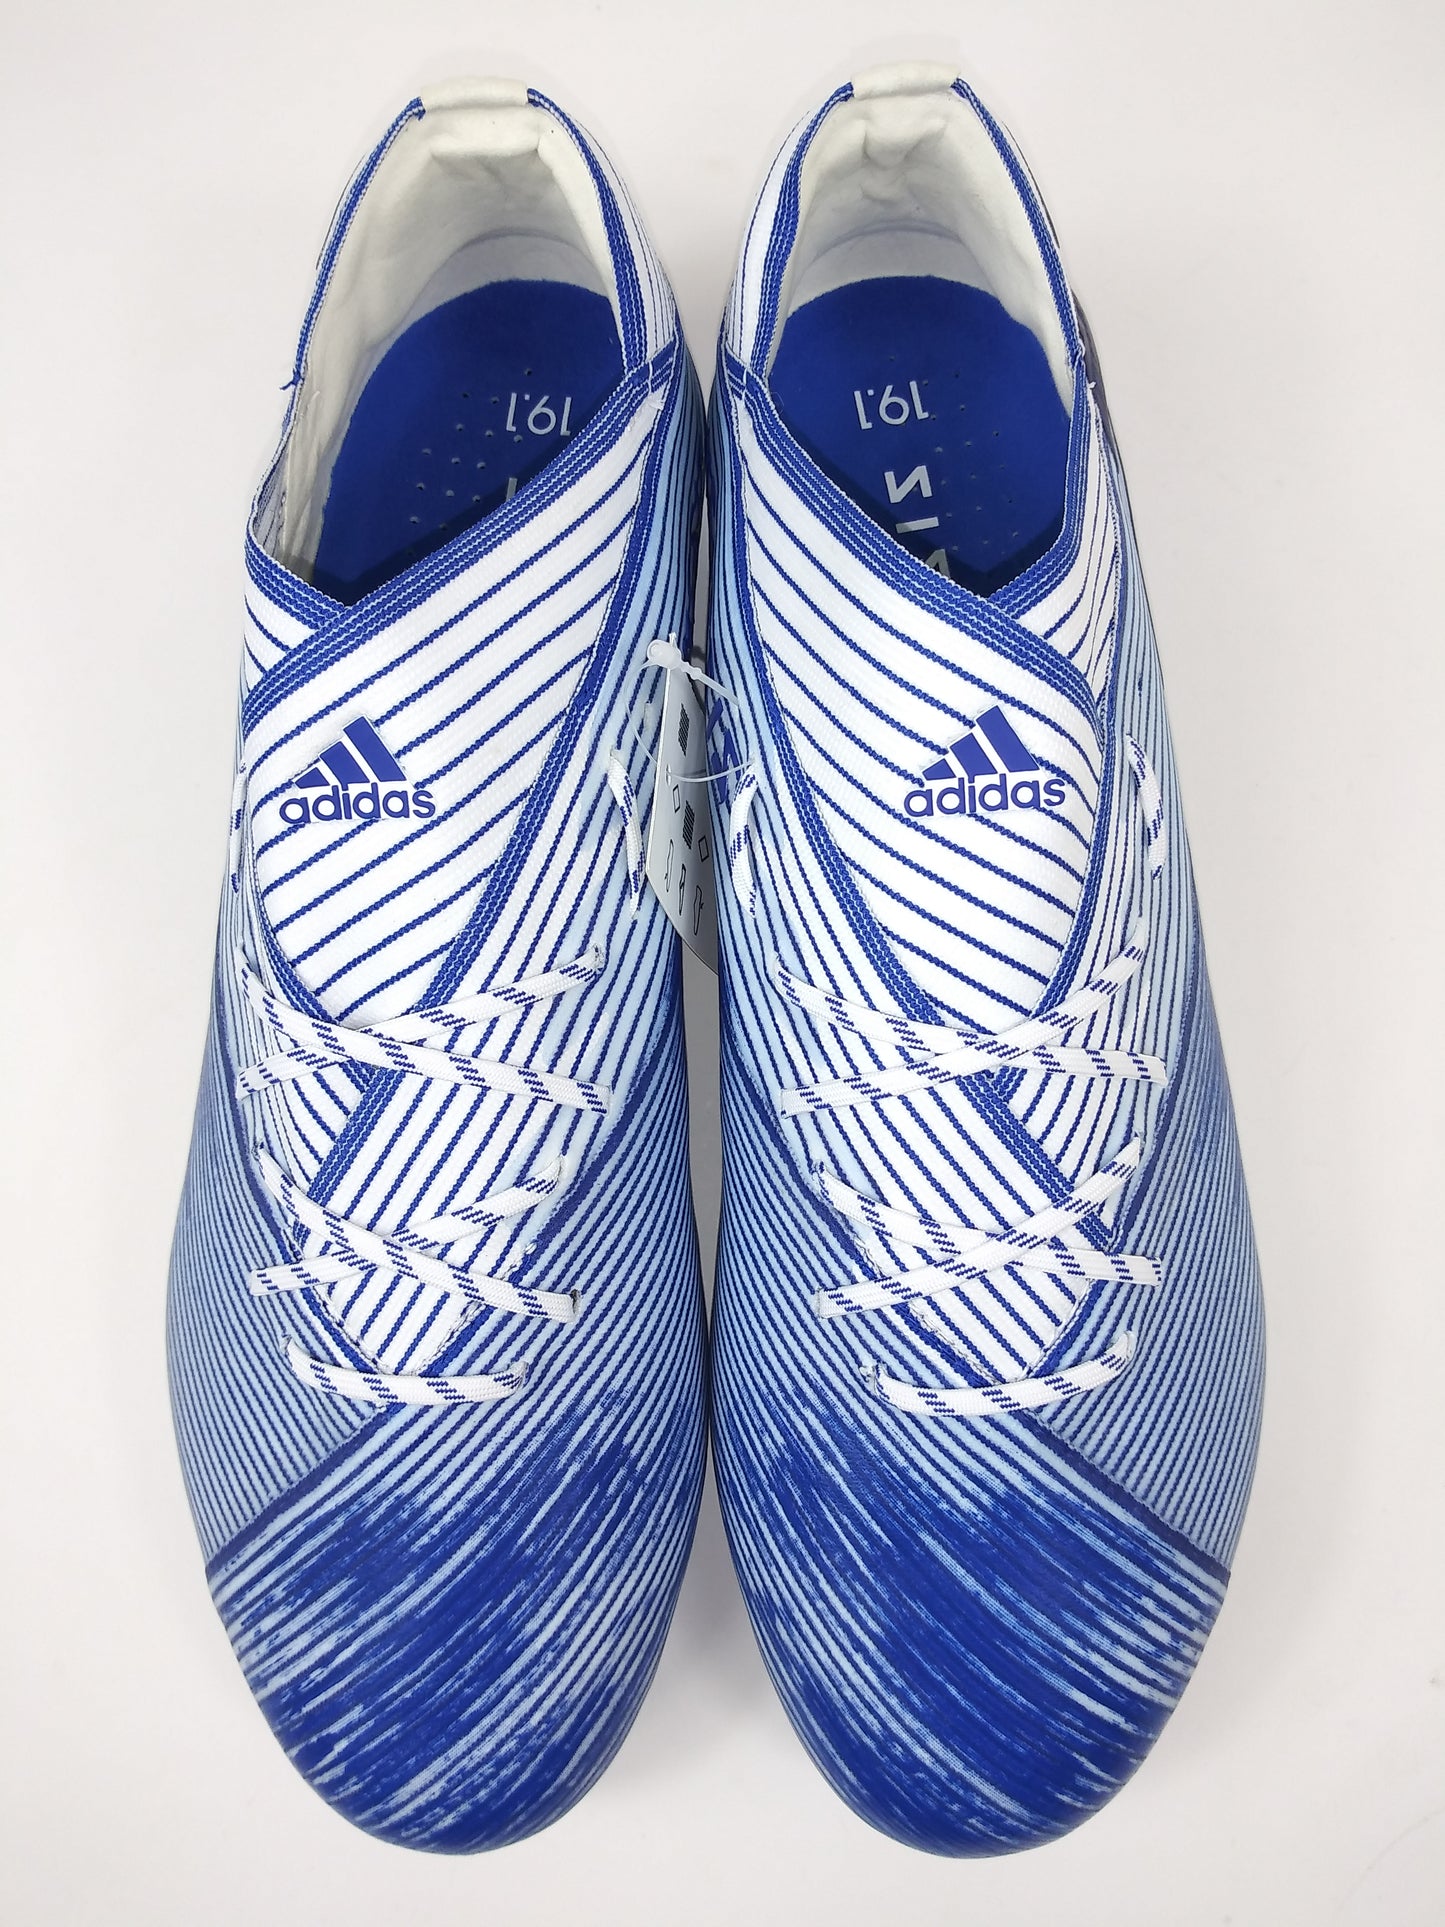 Adidas Nemeziz 19.1 FG Blue White